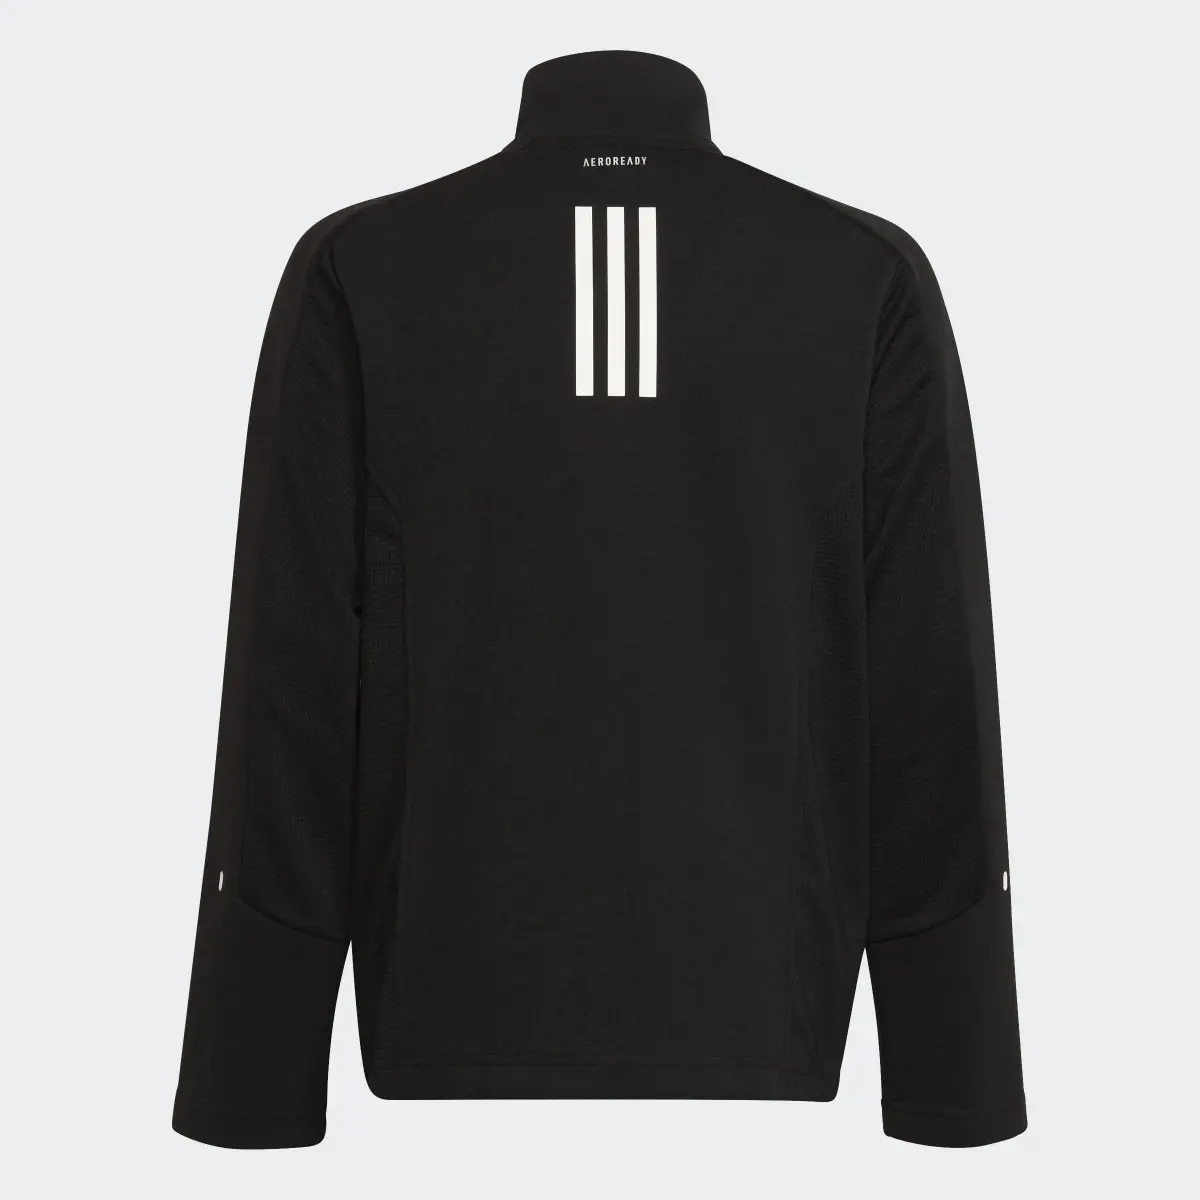 Adidas XFG Techy Inspired Sweatshirt. 2